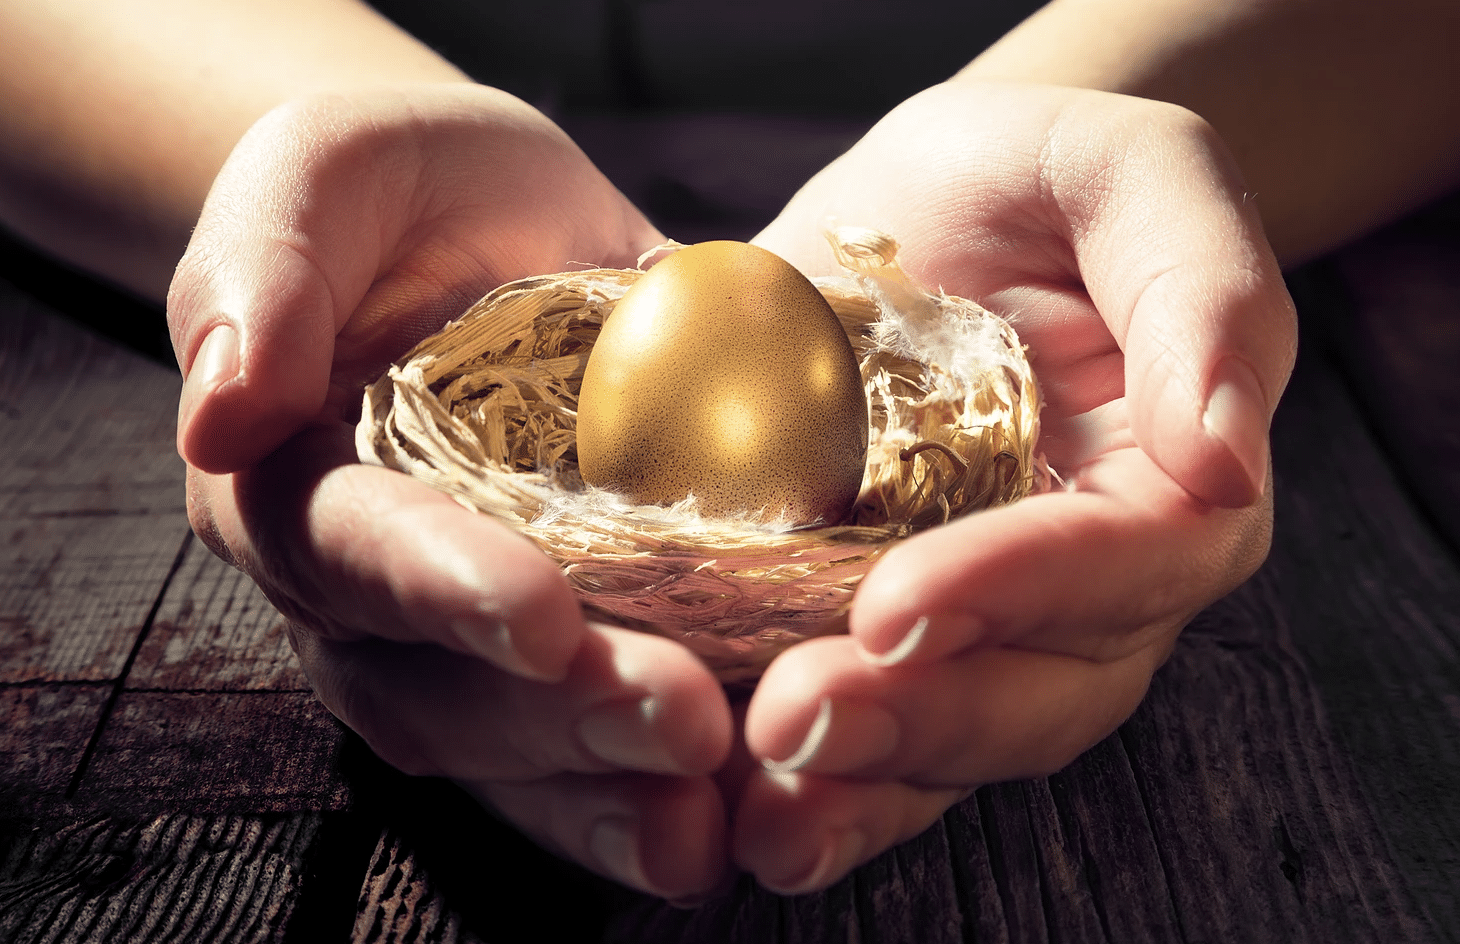 Hands cradling a nest with a golden egg